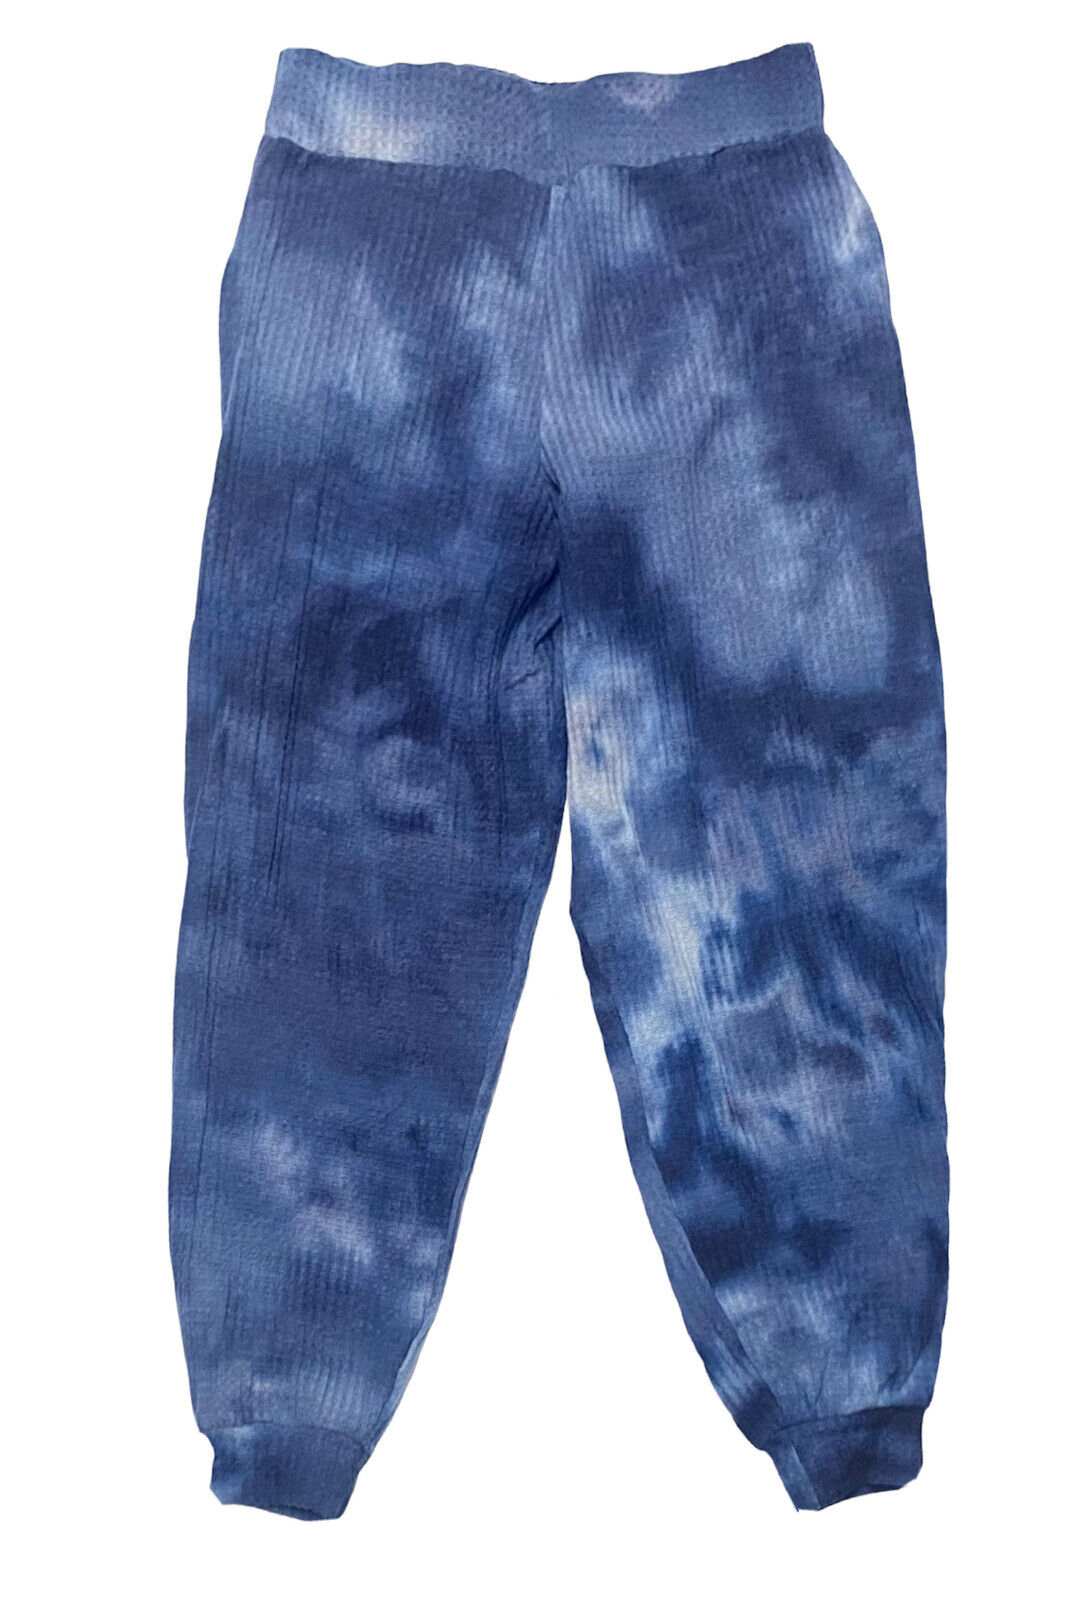 Melissa Masse Waffle Jogger Pant Women's Tie Dye Blue Cute & Comfy